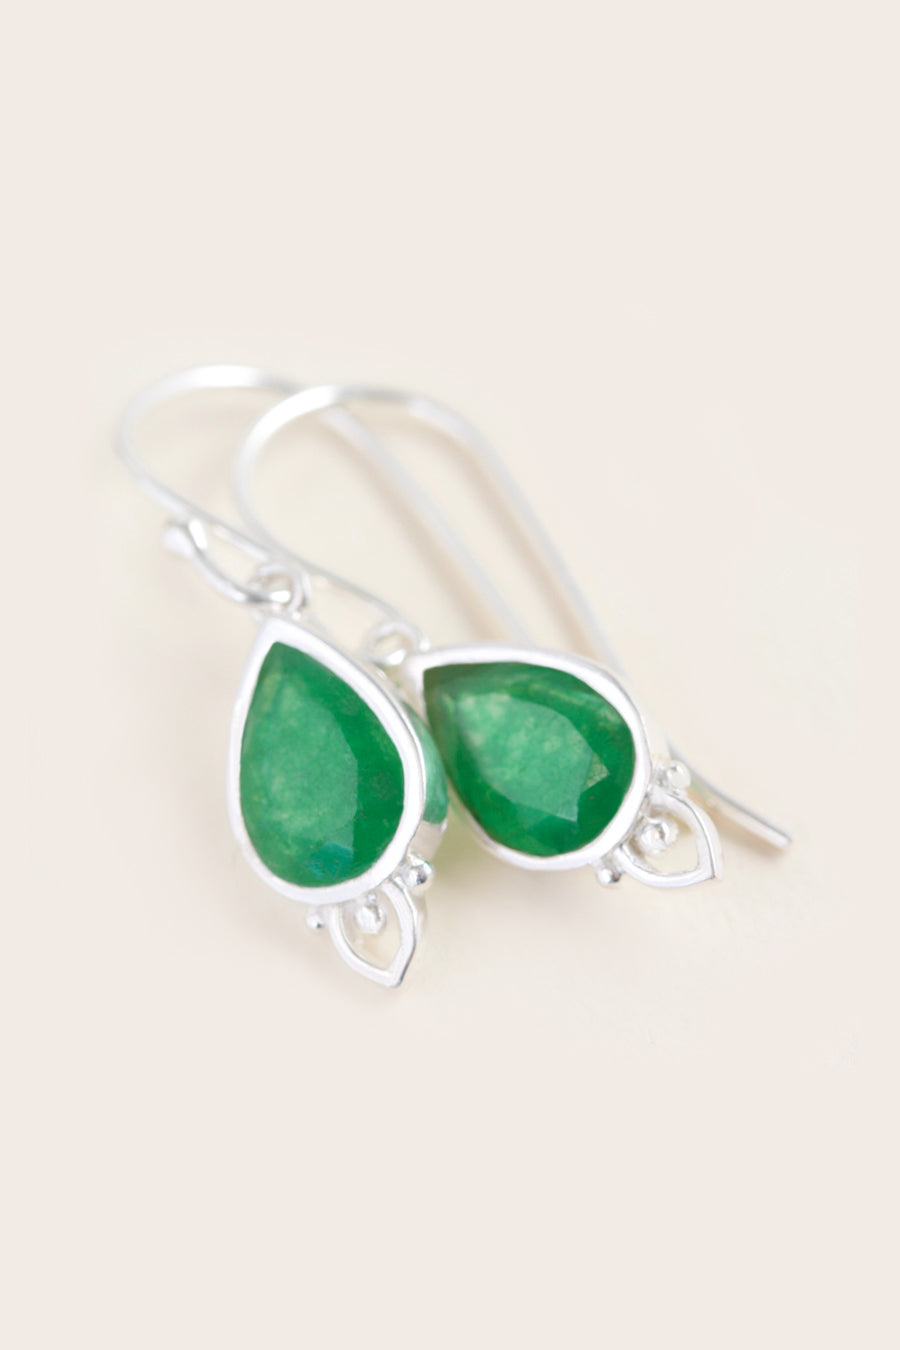 heart chakra green aventurine crystal gemstone spiritual jewellery NZ